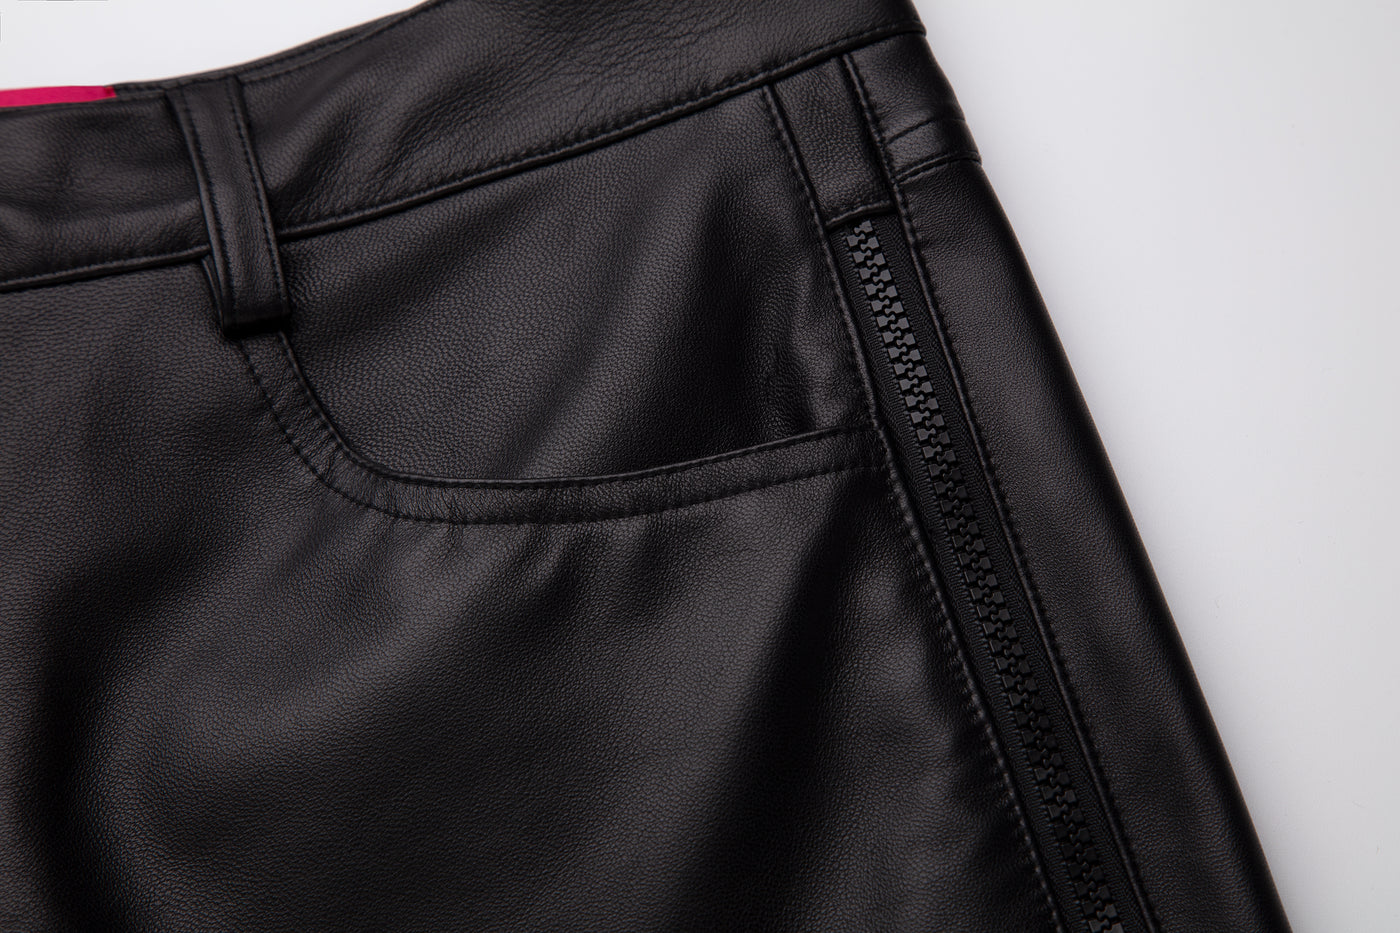 DONCARE "Basic Leather Pants" - Black